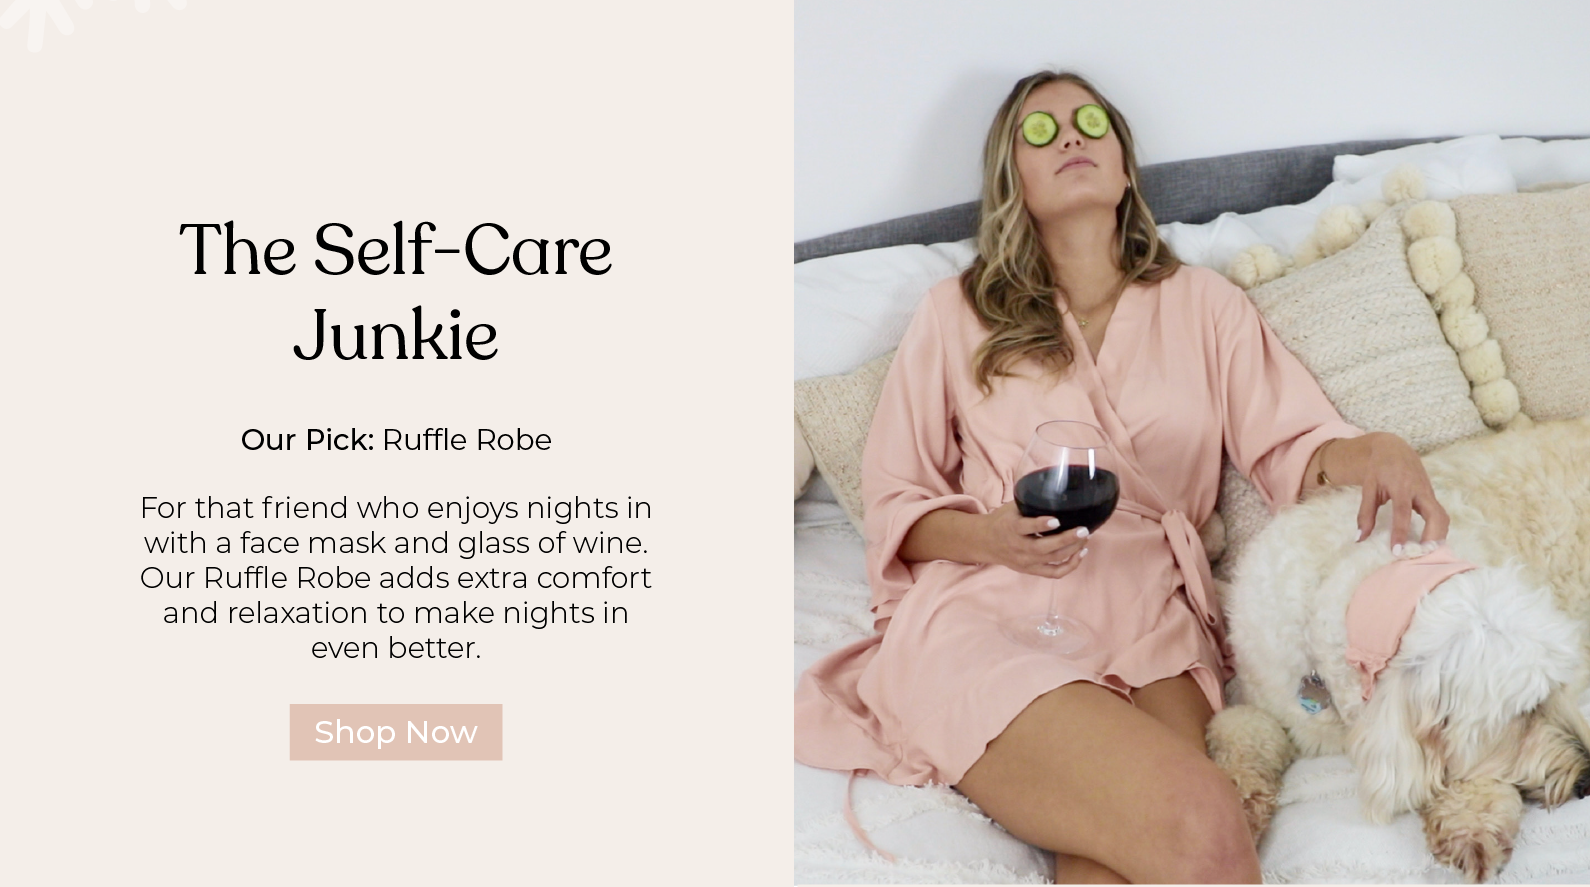 Half Asleep Sleepwear - The perfect gift for the self care junkie